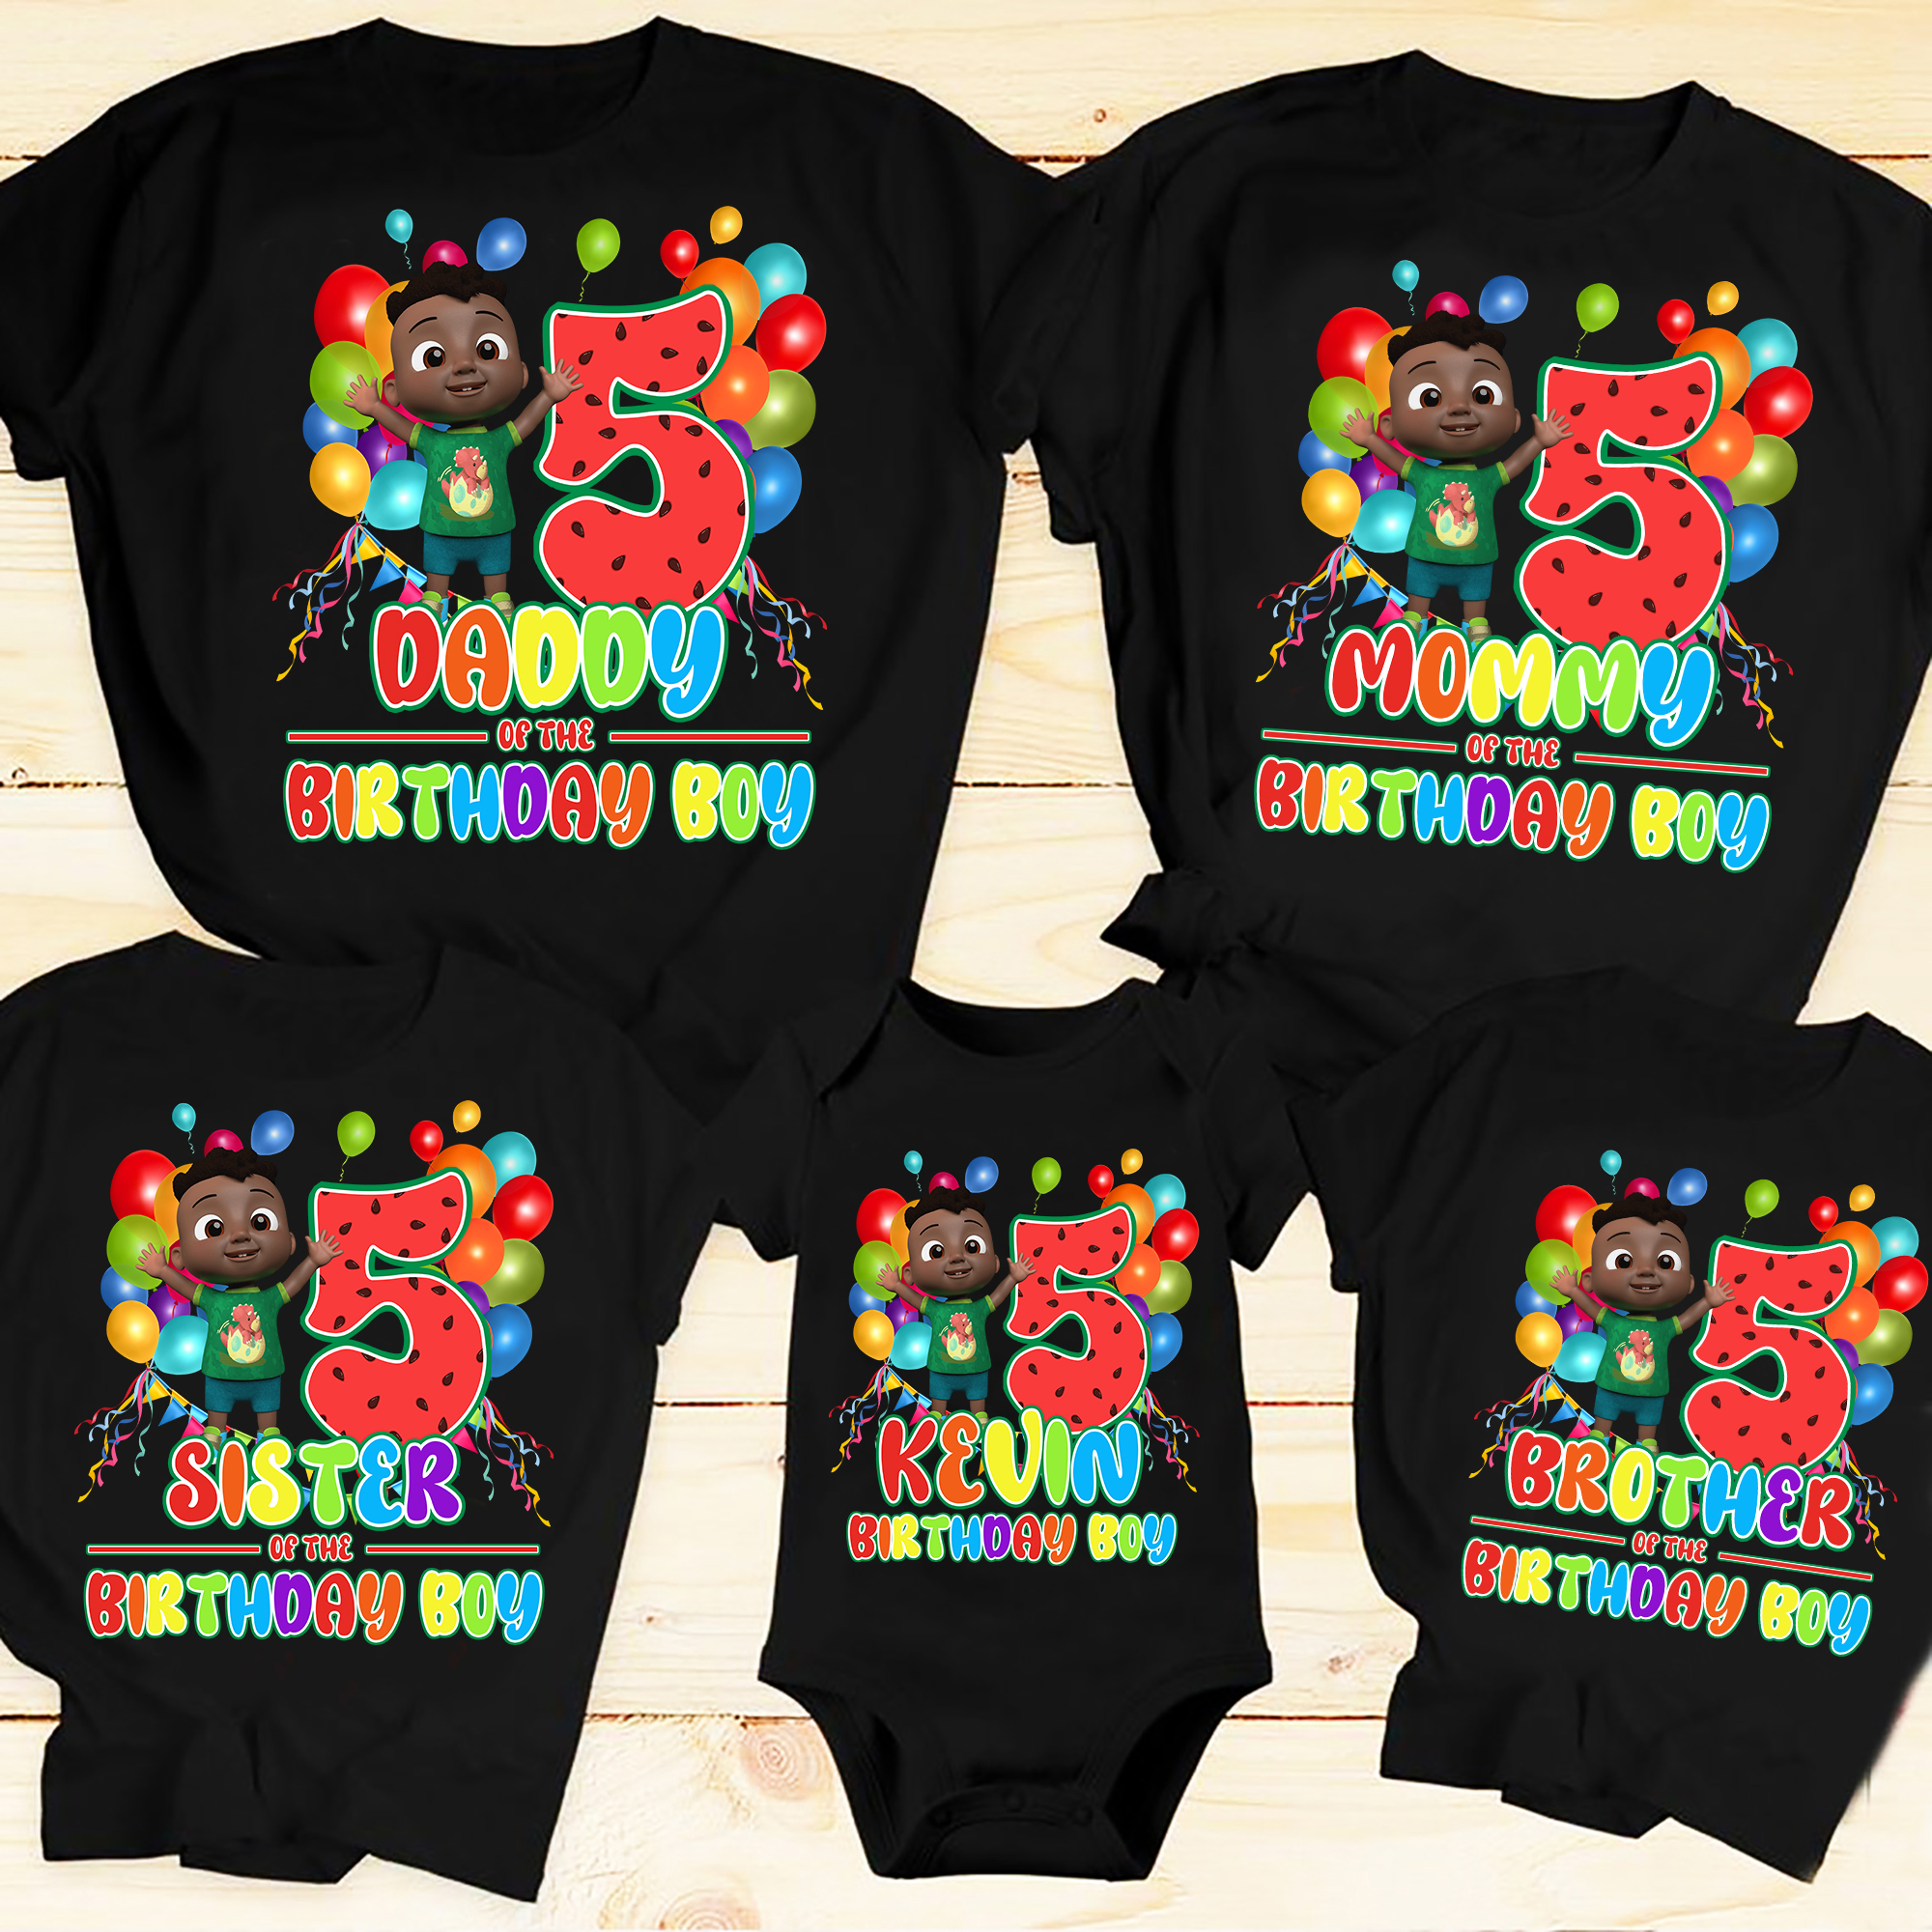 Cody Coco melon birthday theme shirts  customized Cocomelon Birthday shirts  Family matching Shirts